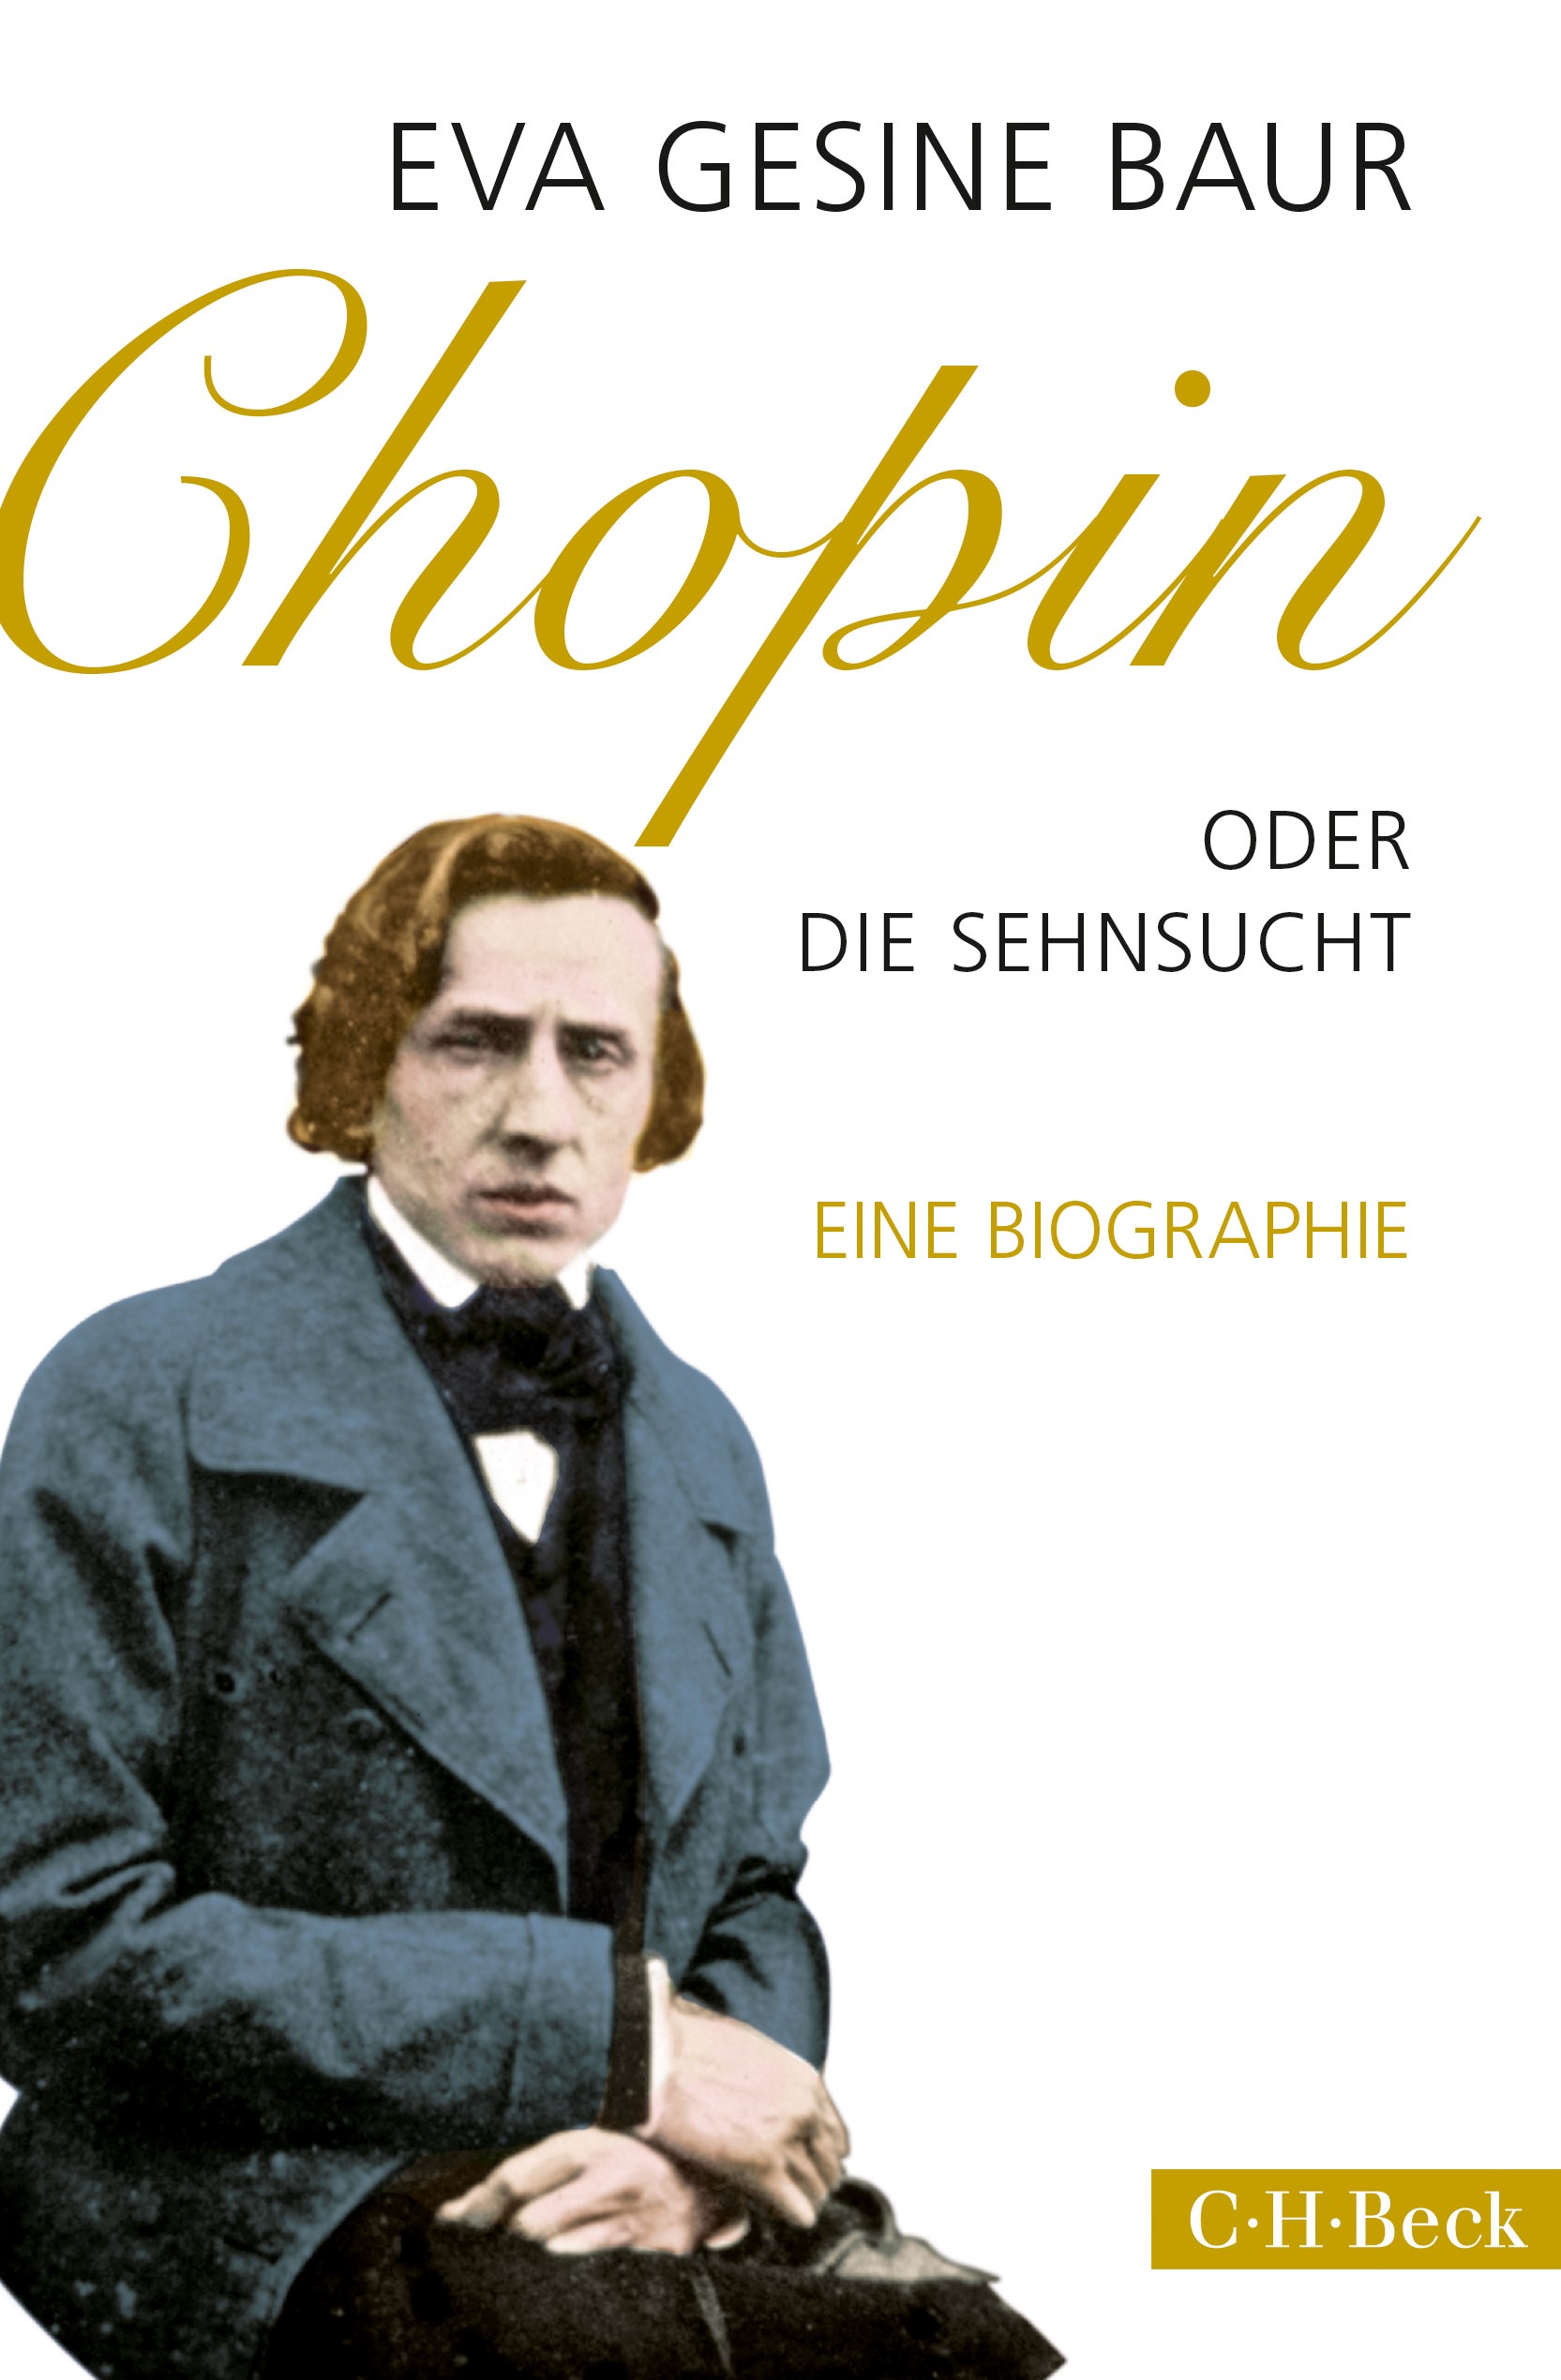 Cover: Baur, Eva Gesine, Chopin